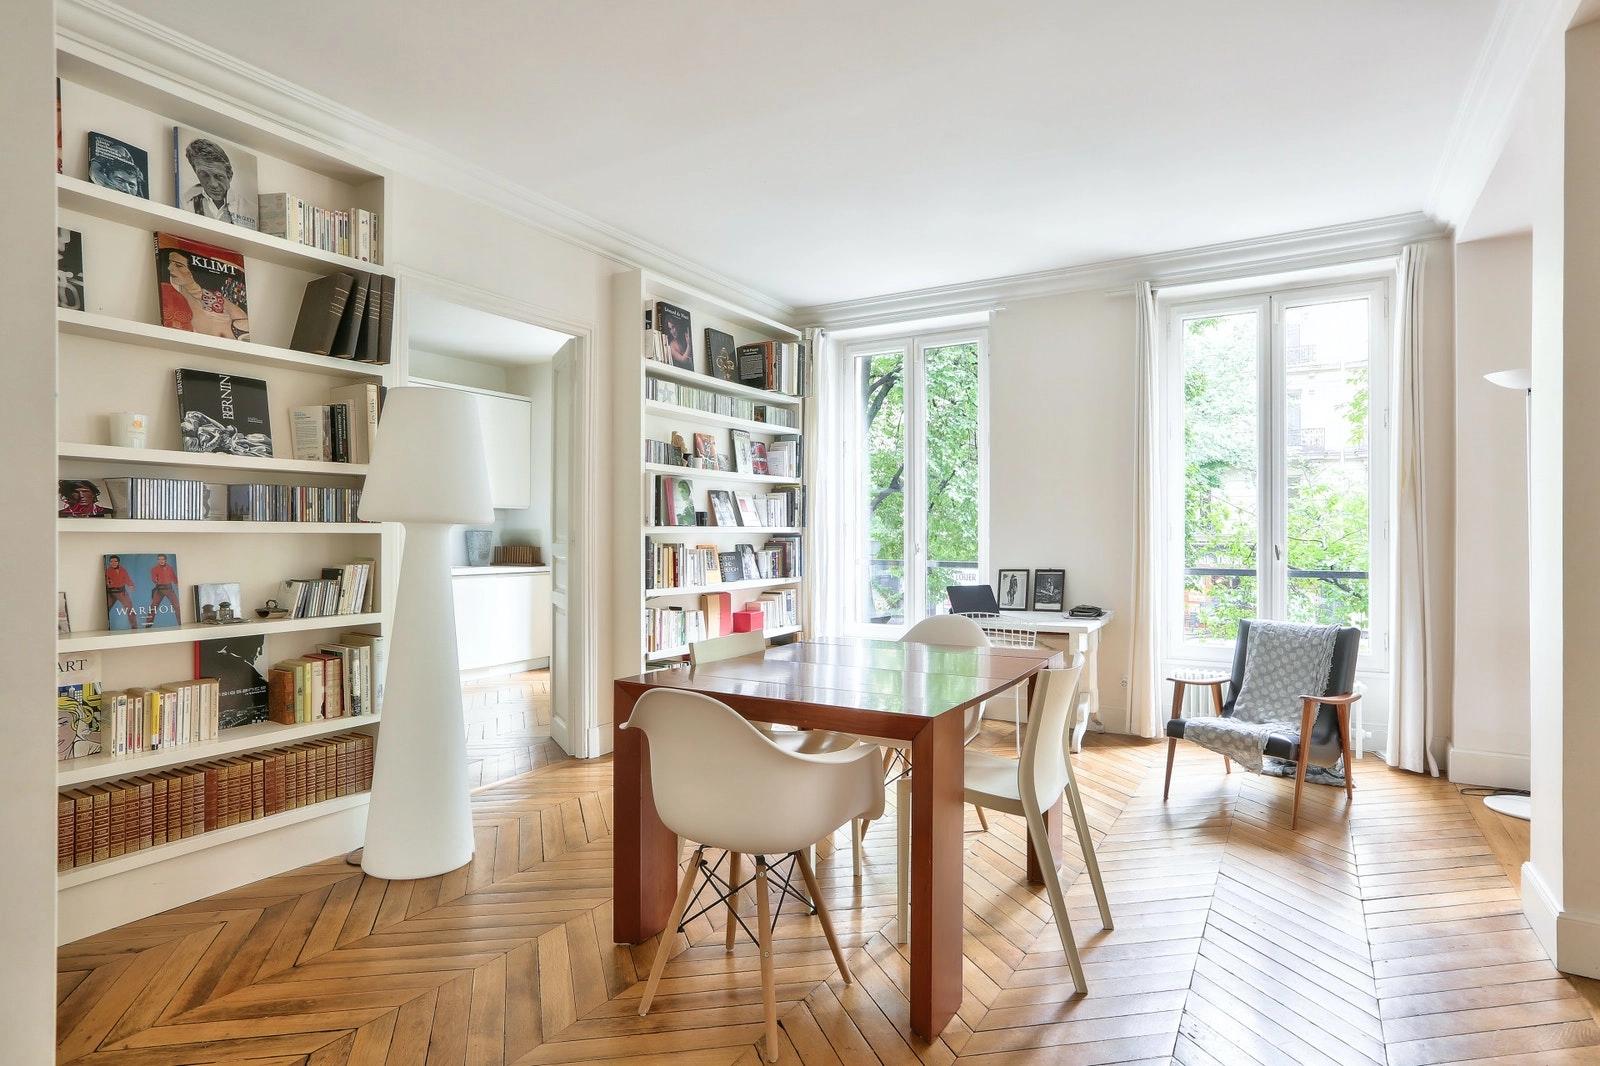 Comedor dentro Preciosa, luminosa y cálida casa contemporánea de estilo Haussmann - 1